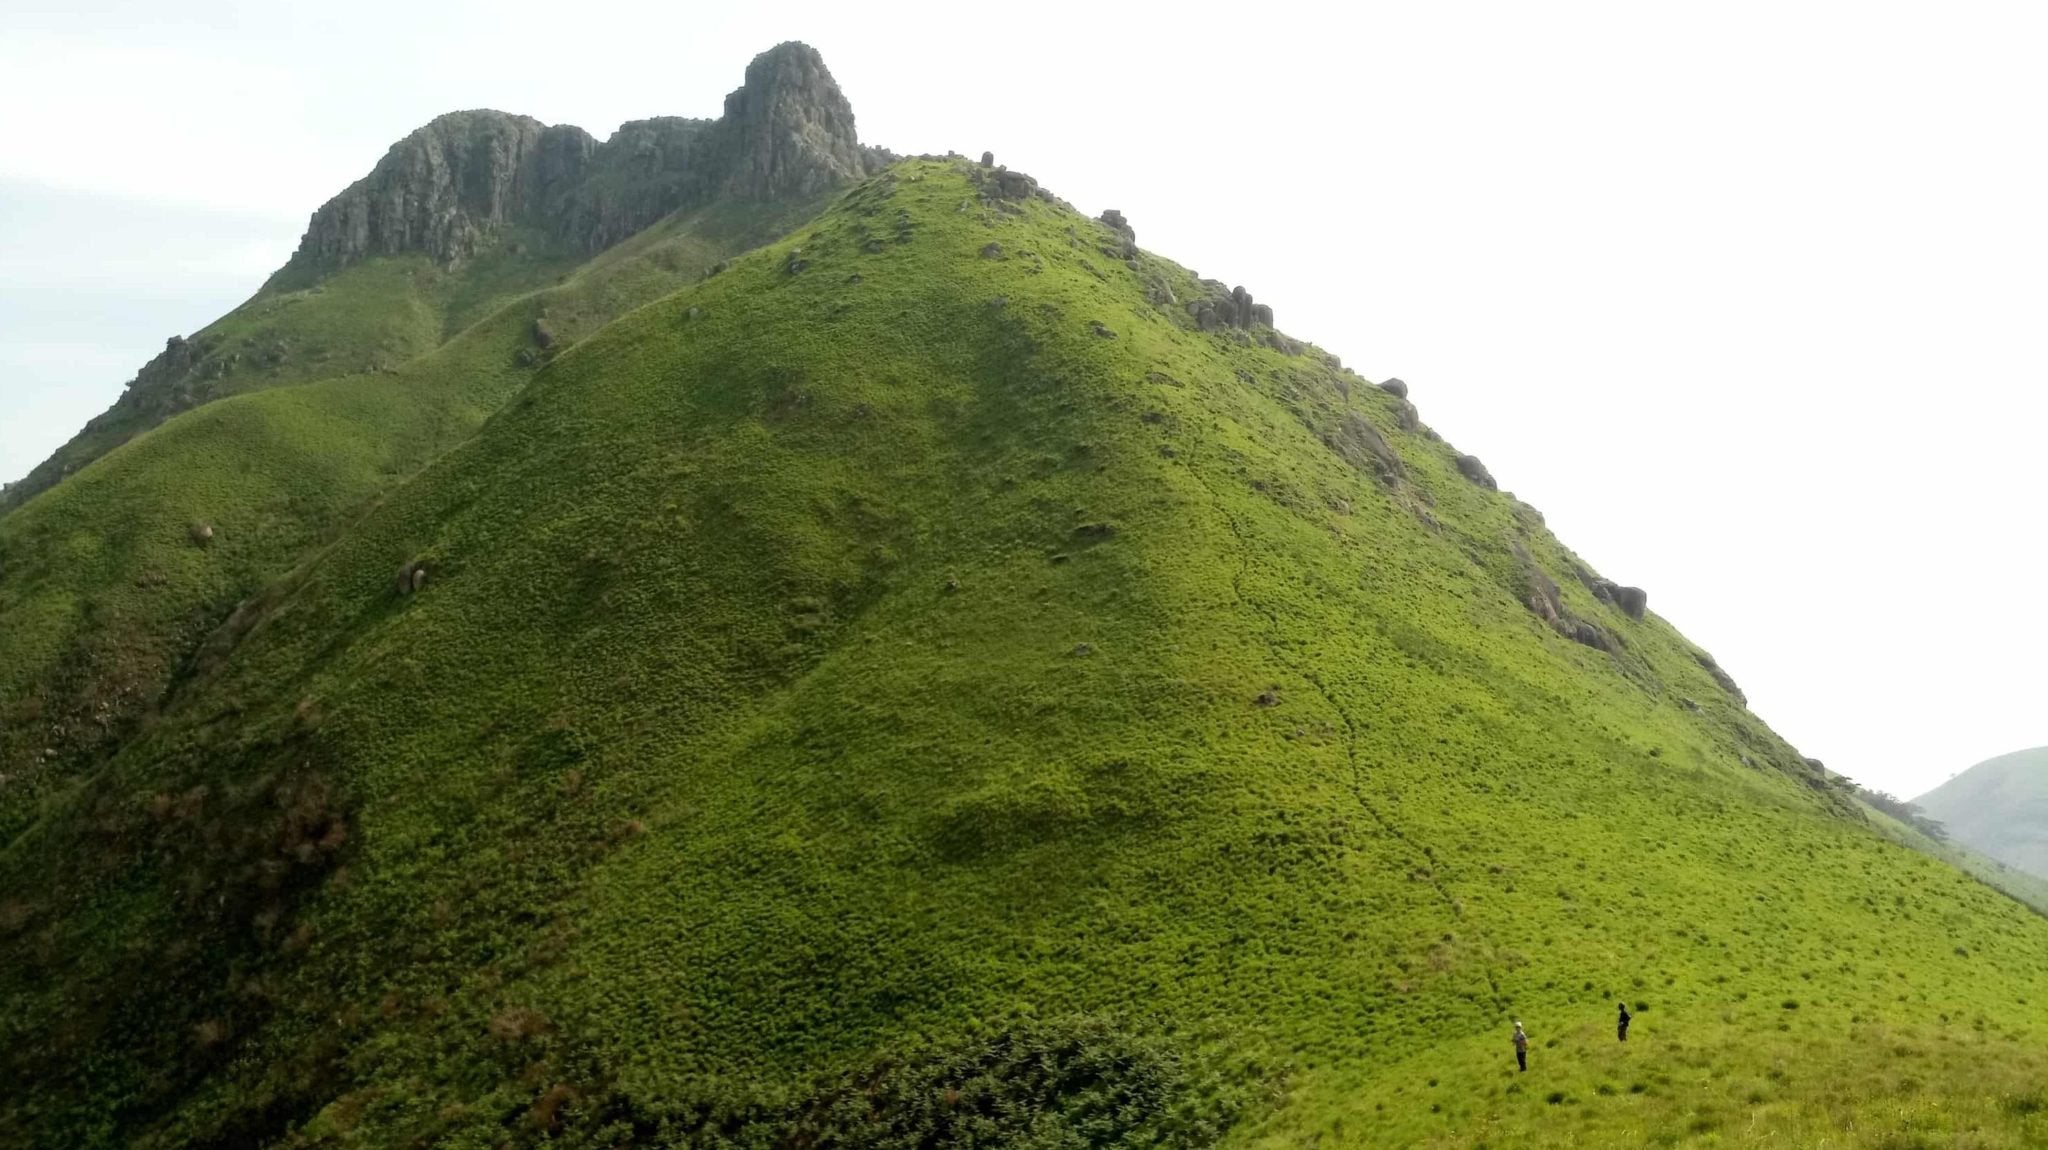 Highest peak of Sierra Leone